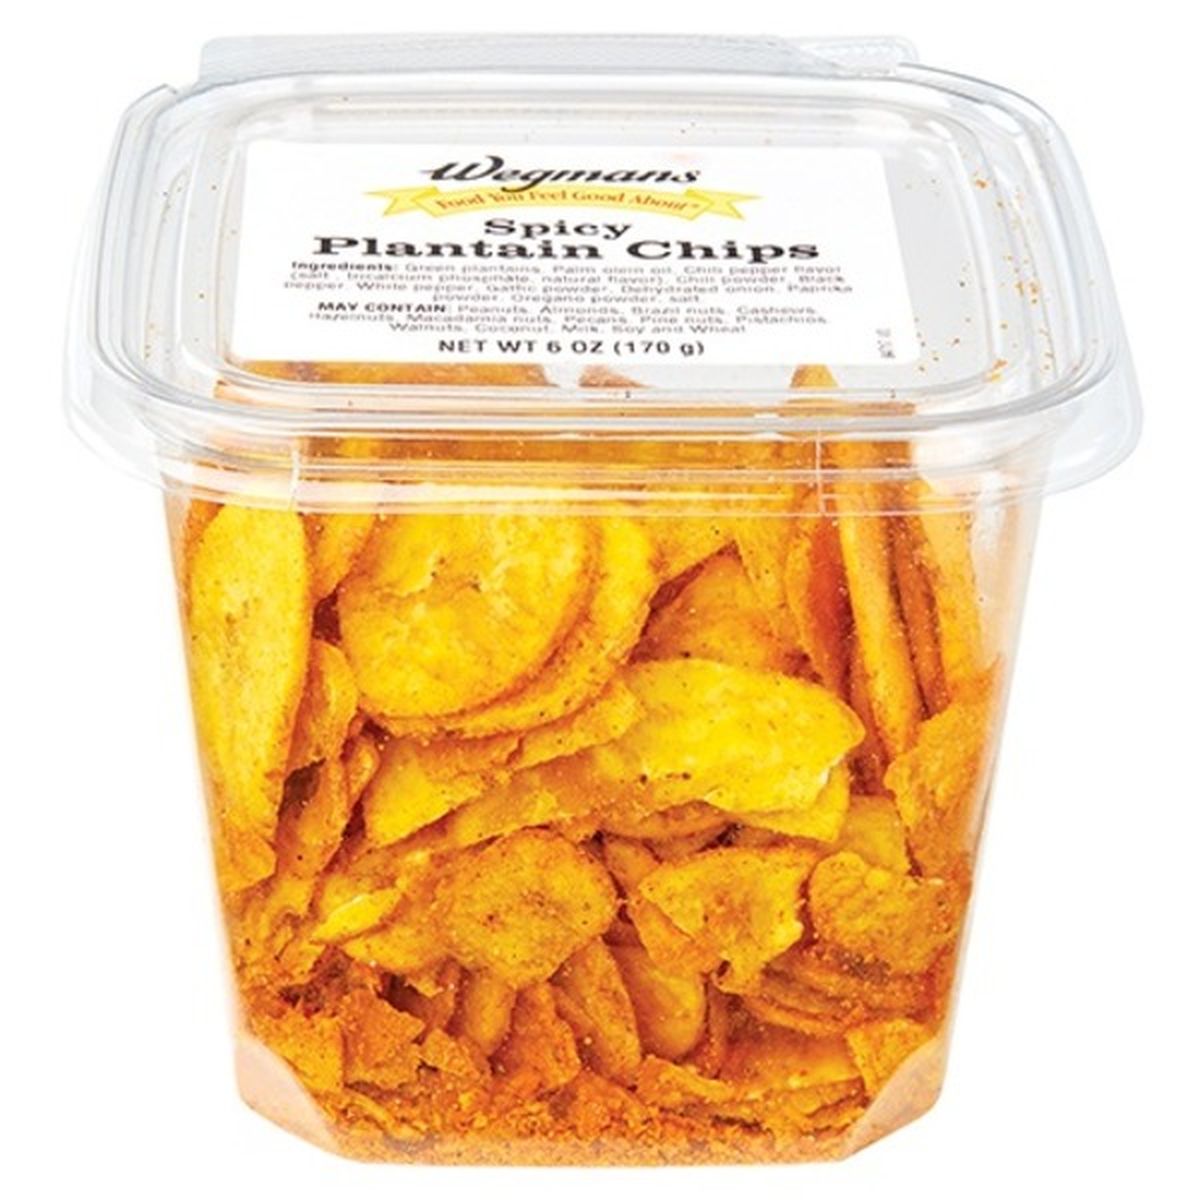 Calories in Wegmans Spicy Plantain Chips